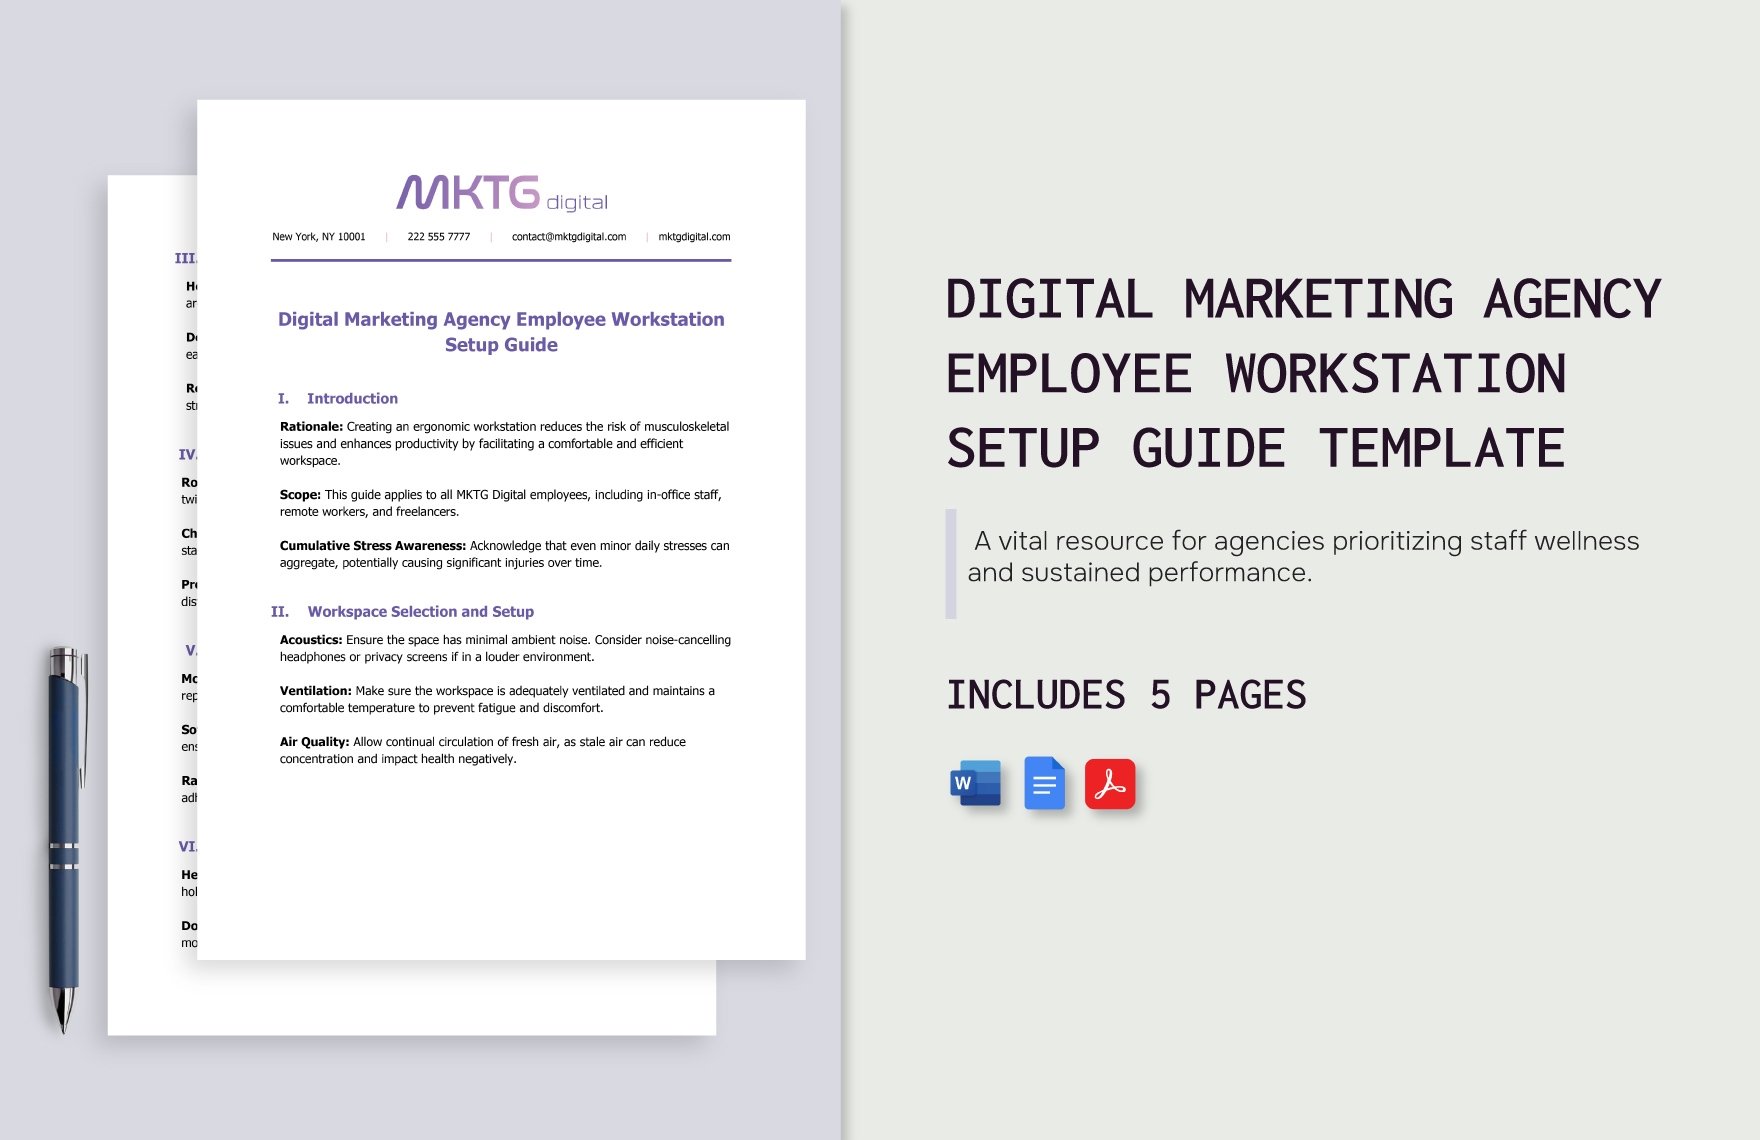 Digital Marketing Agency Employee Workstation Setup Guide Template